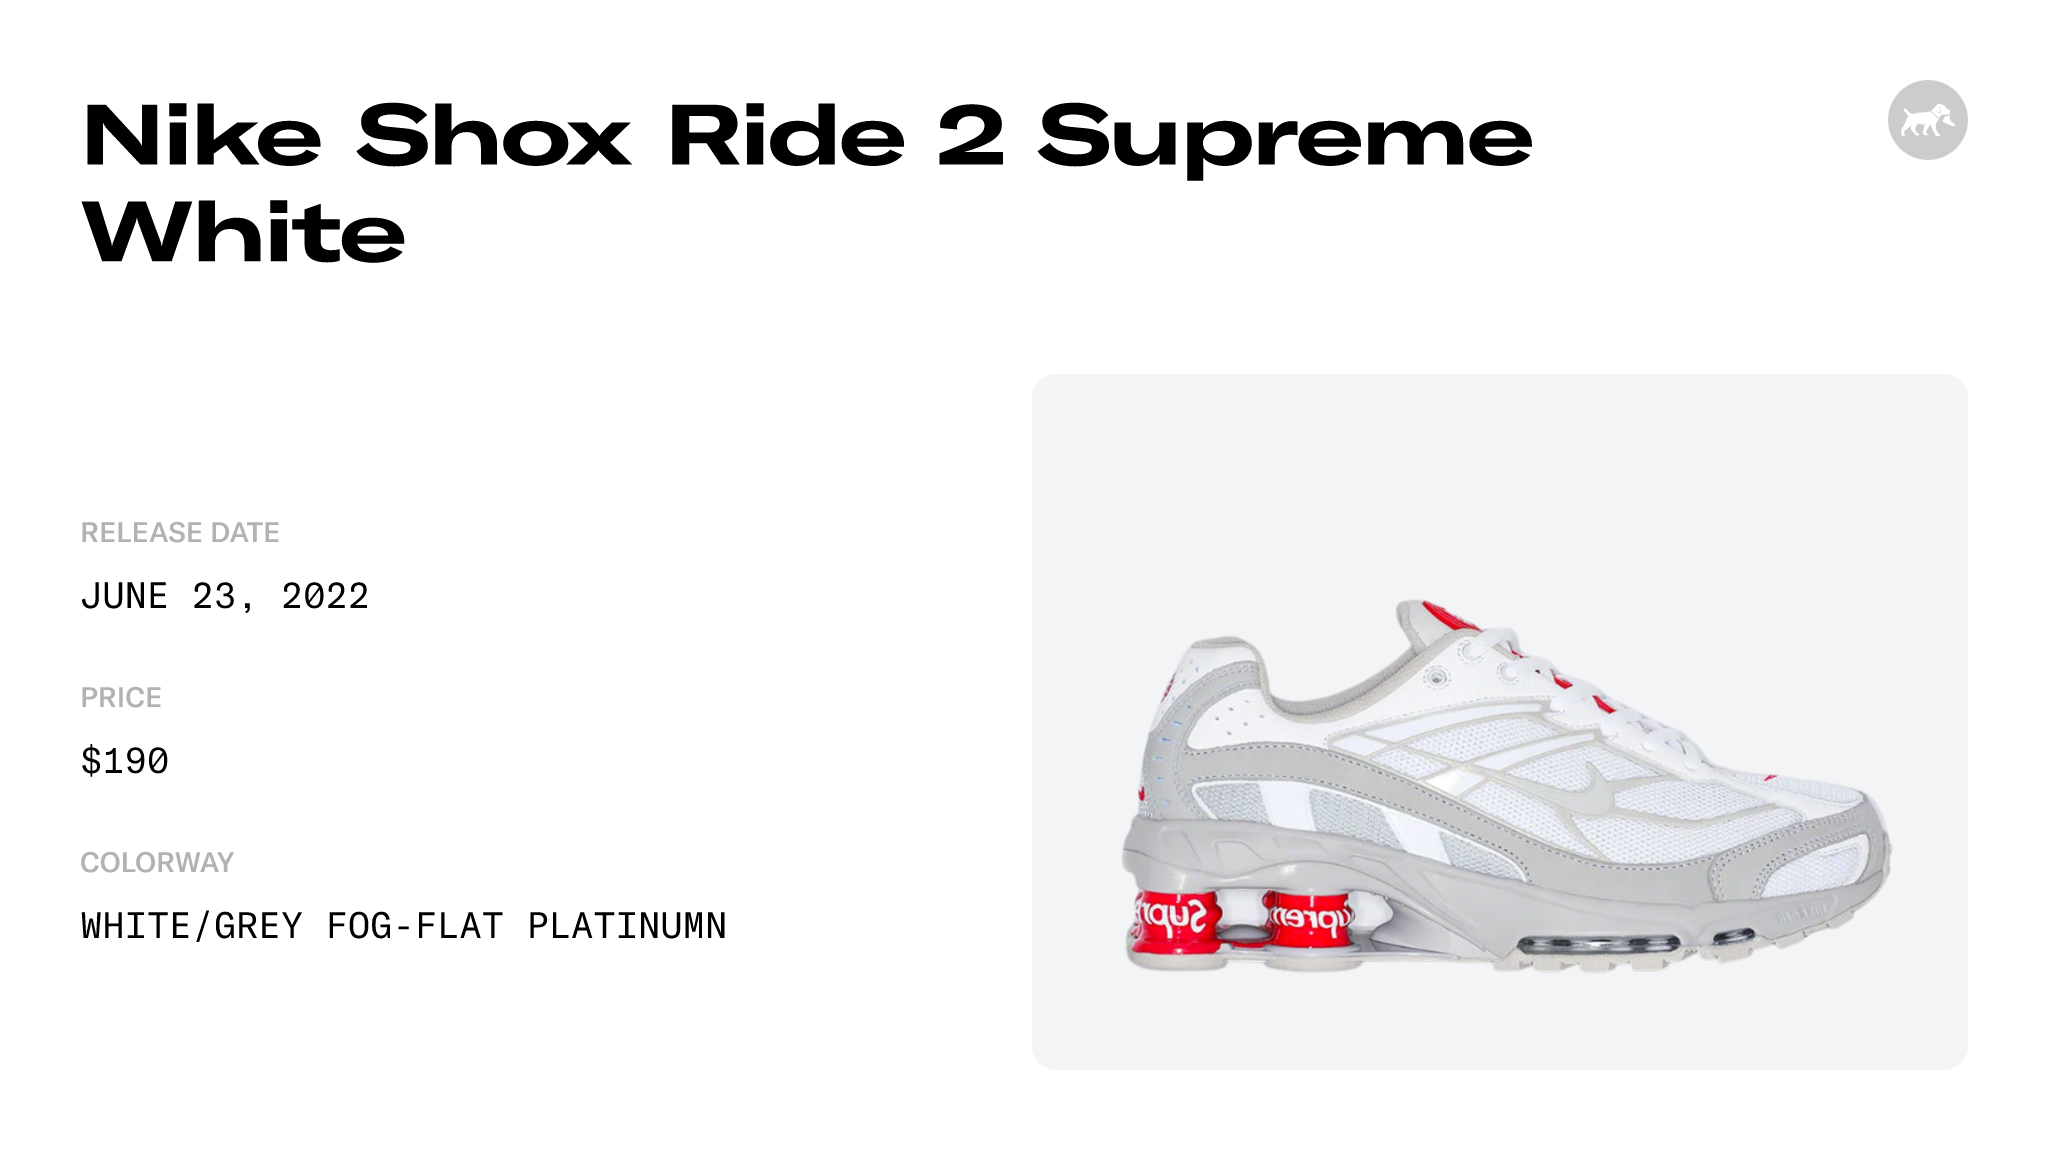 Nike Shox Ride 2 Supreme White Raffles and Release Date